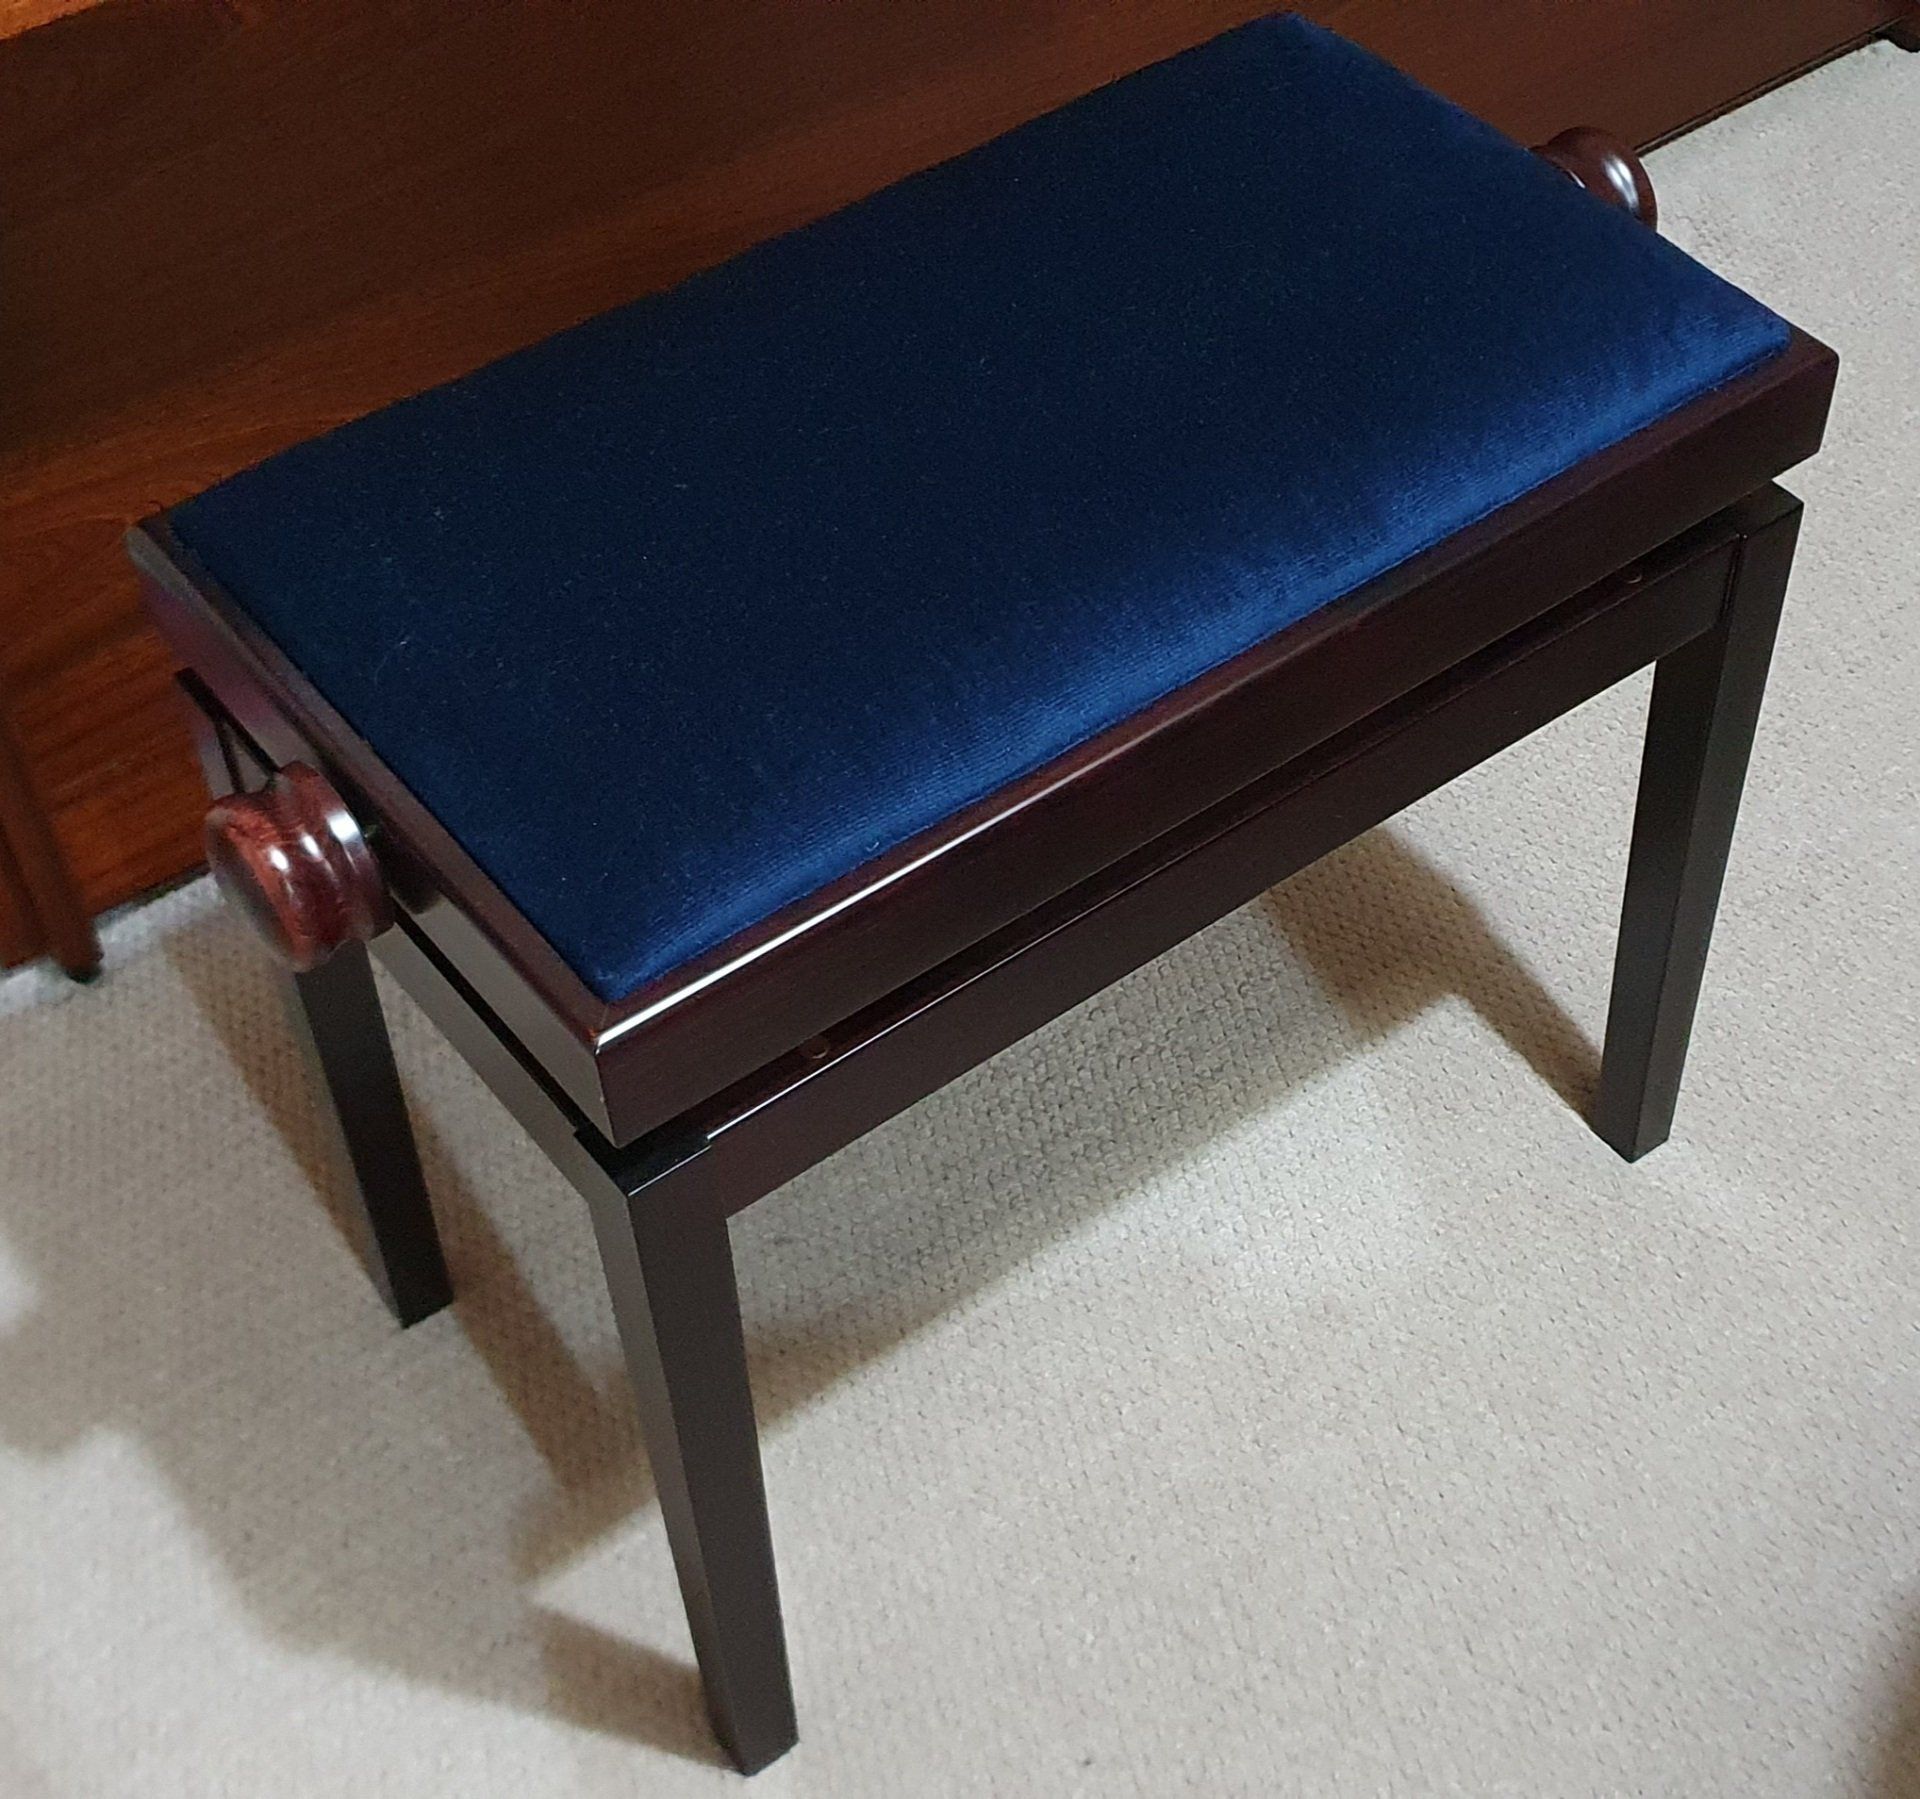 Adjustable piano stool